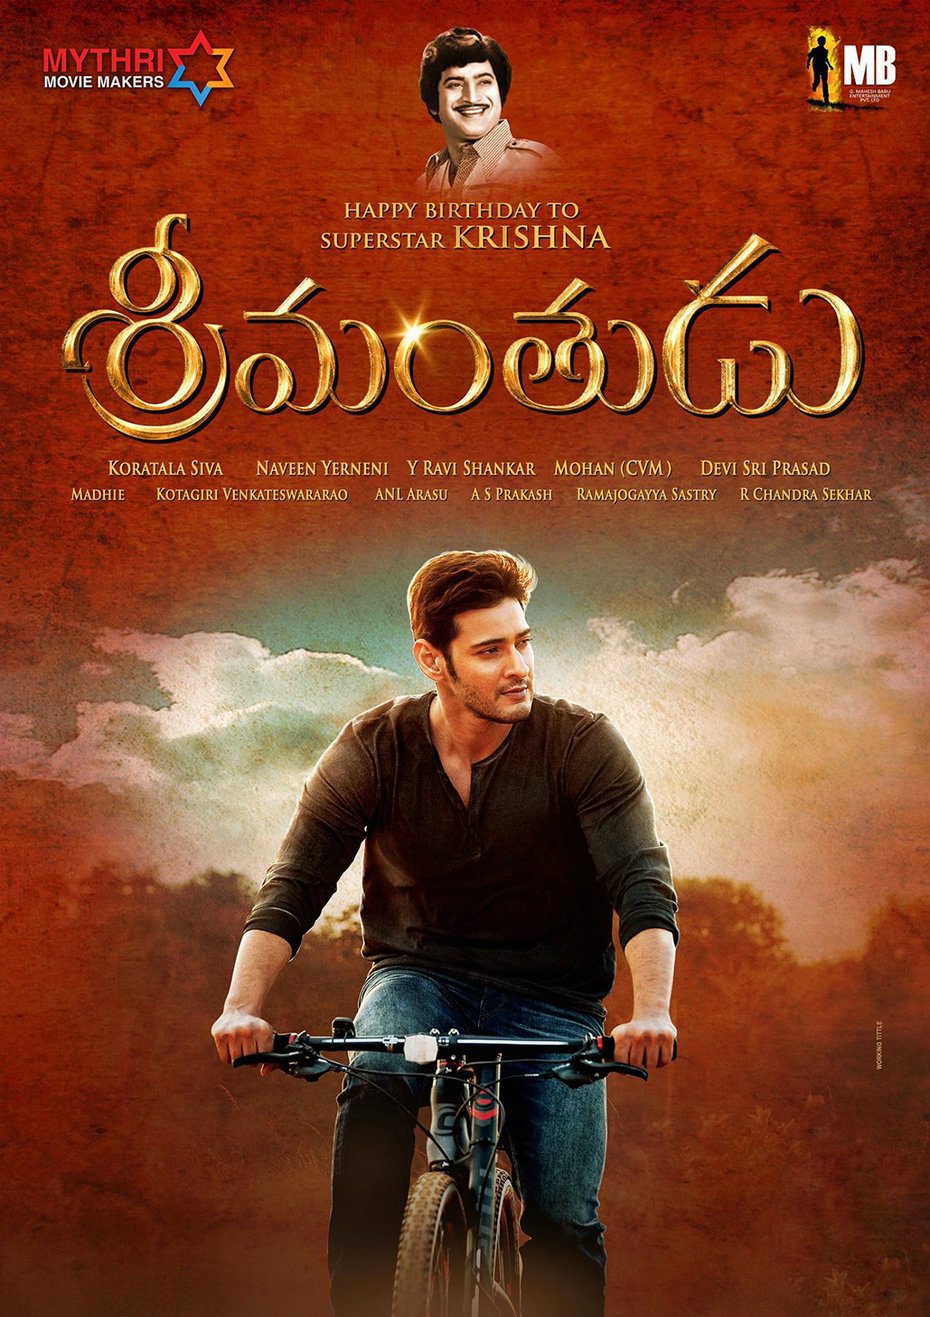 Telugu poster of the movie Srimanthudu